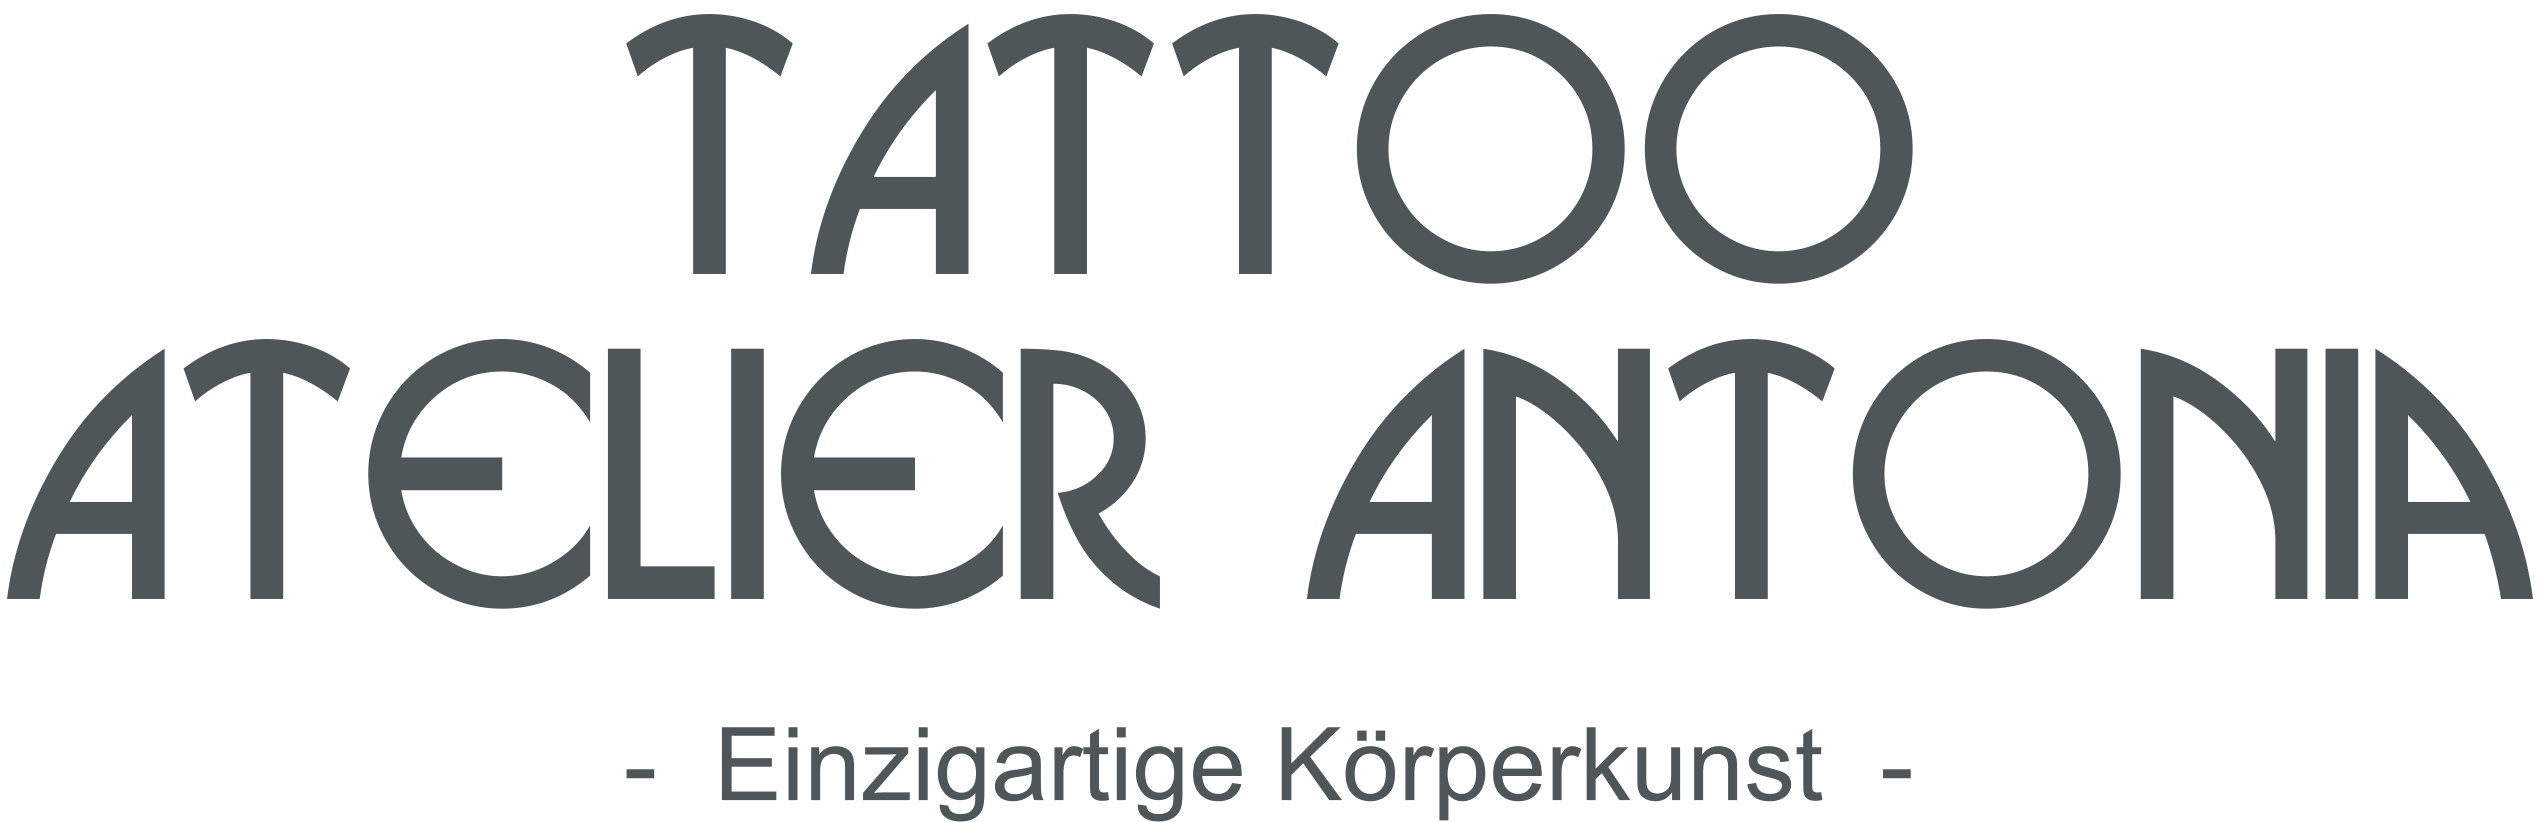 Tattoo Atelier Antonia